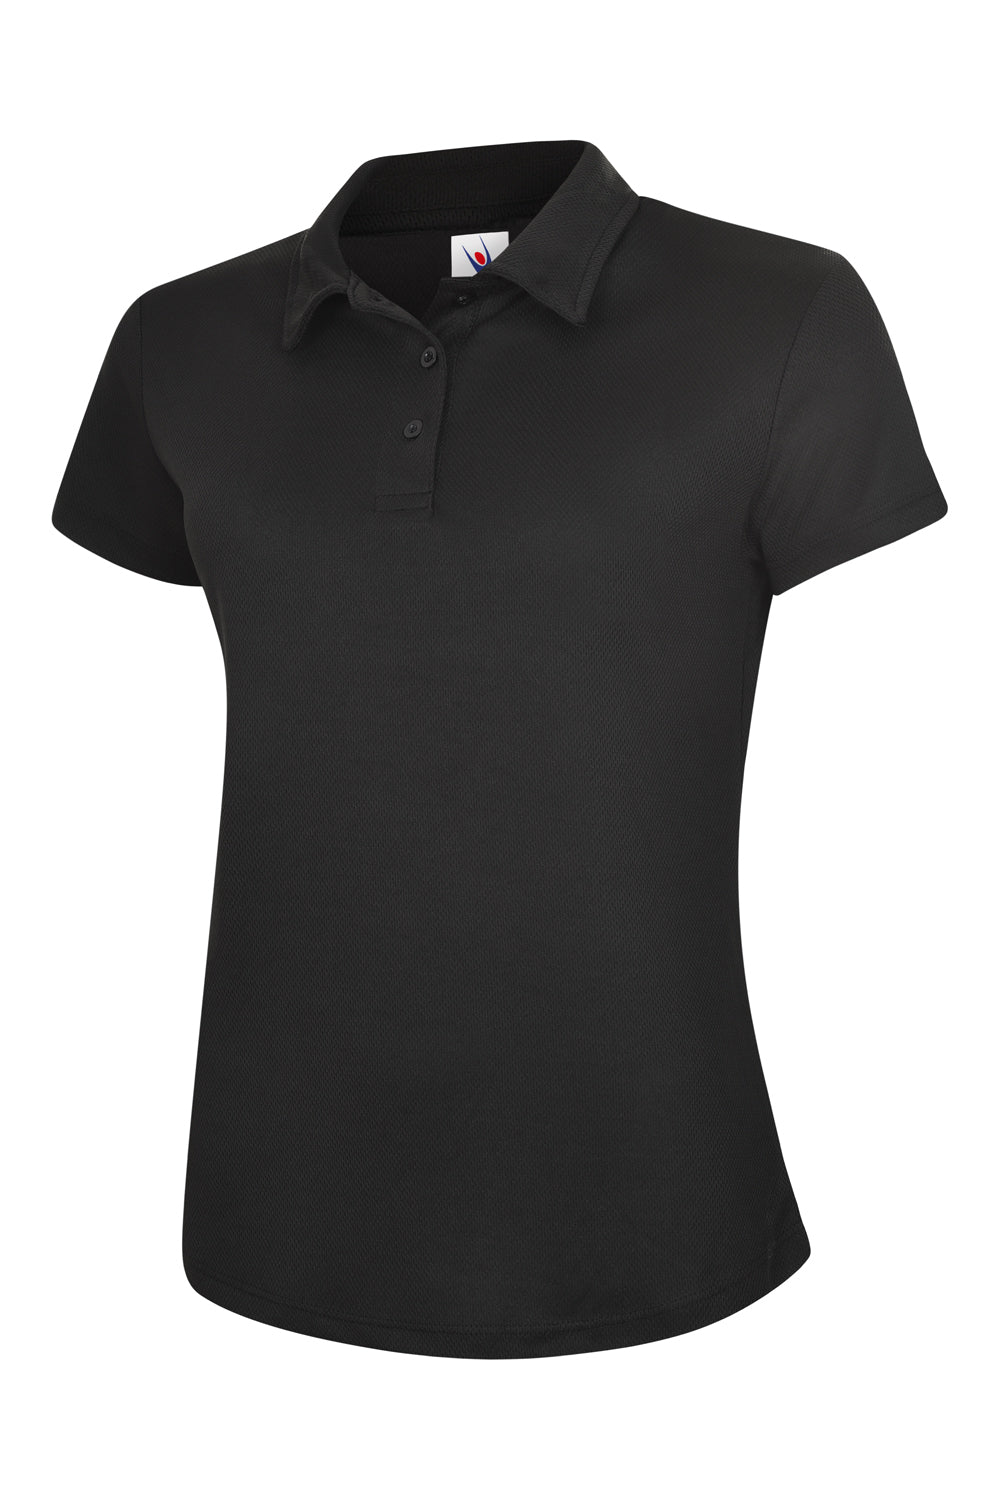 Uneek Ladies Super Cool Workwear Poloshirt UC128 - Black